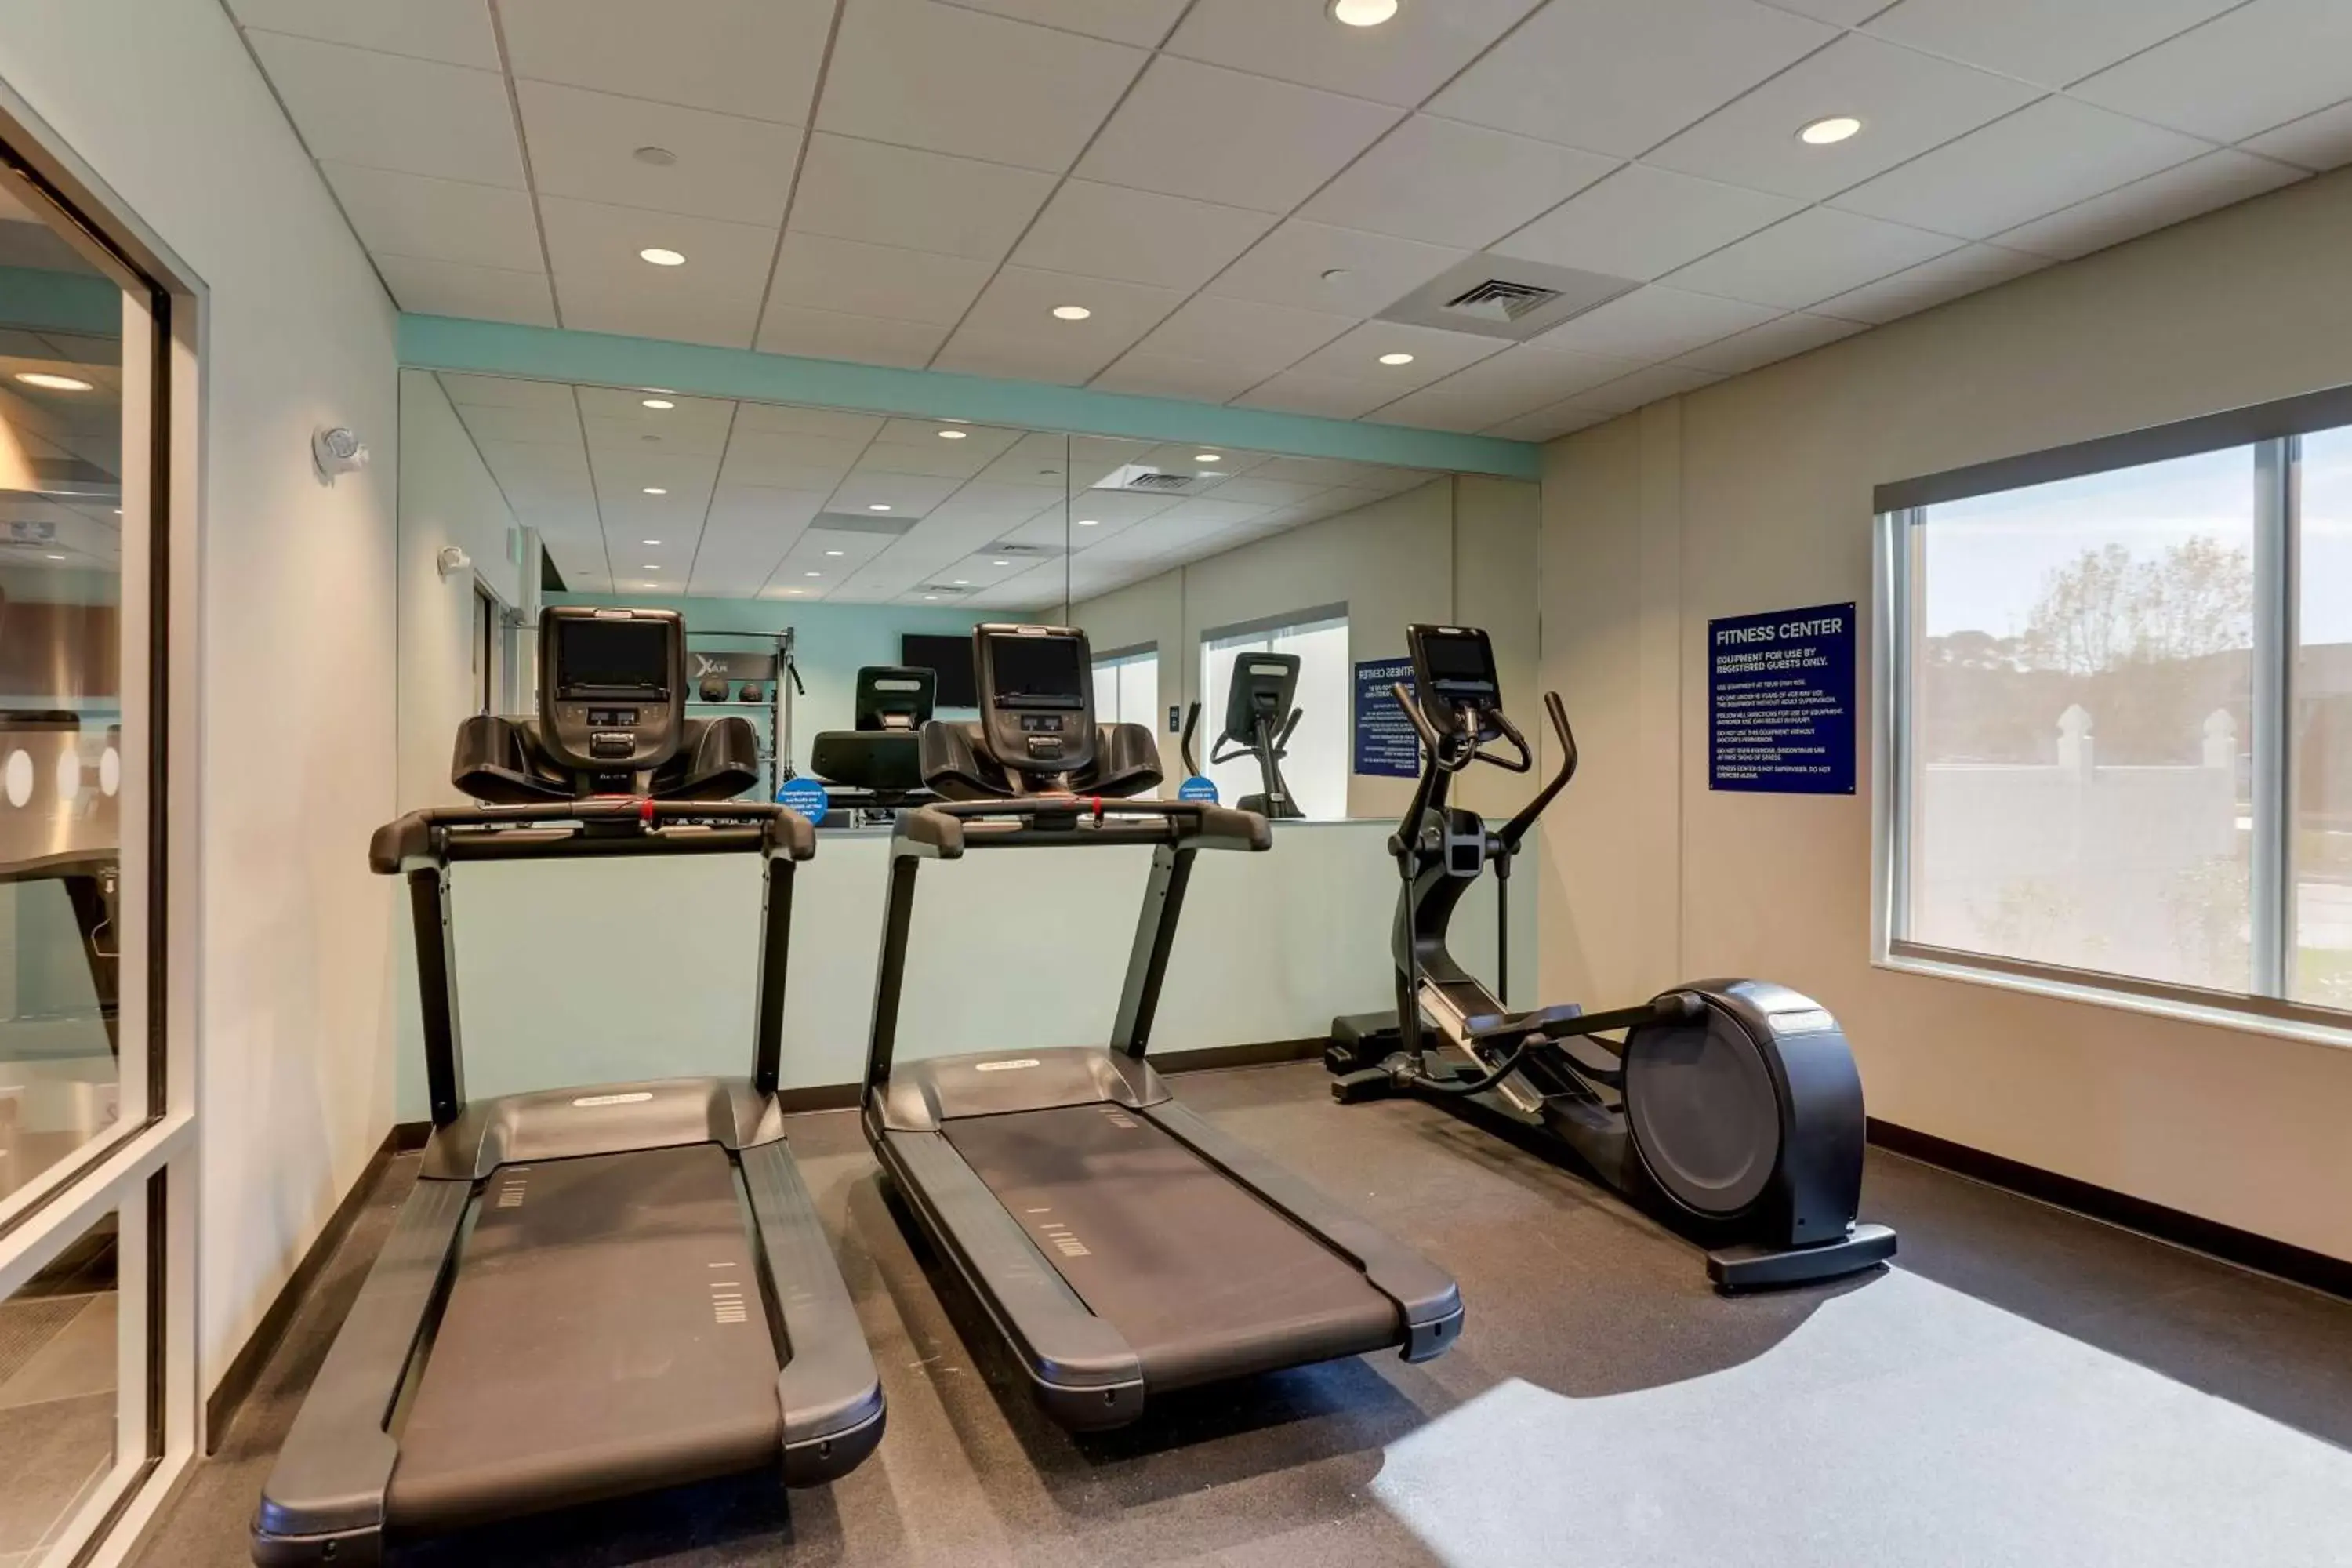 Fitness centre/facilities, Fitness Center/Facilities in Tru By Hilton Smithfield I-95